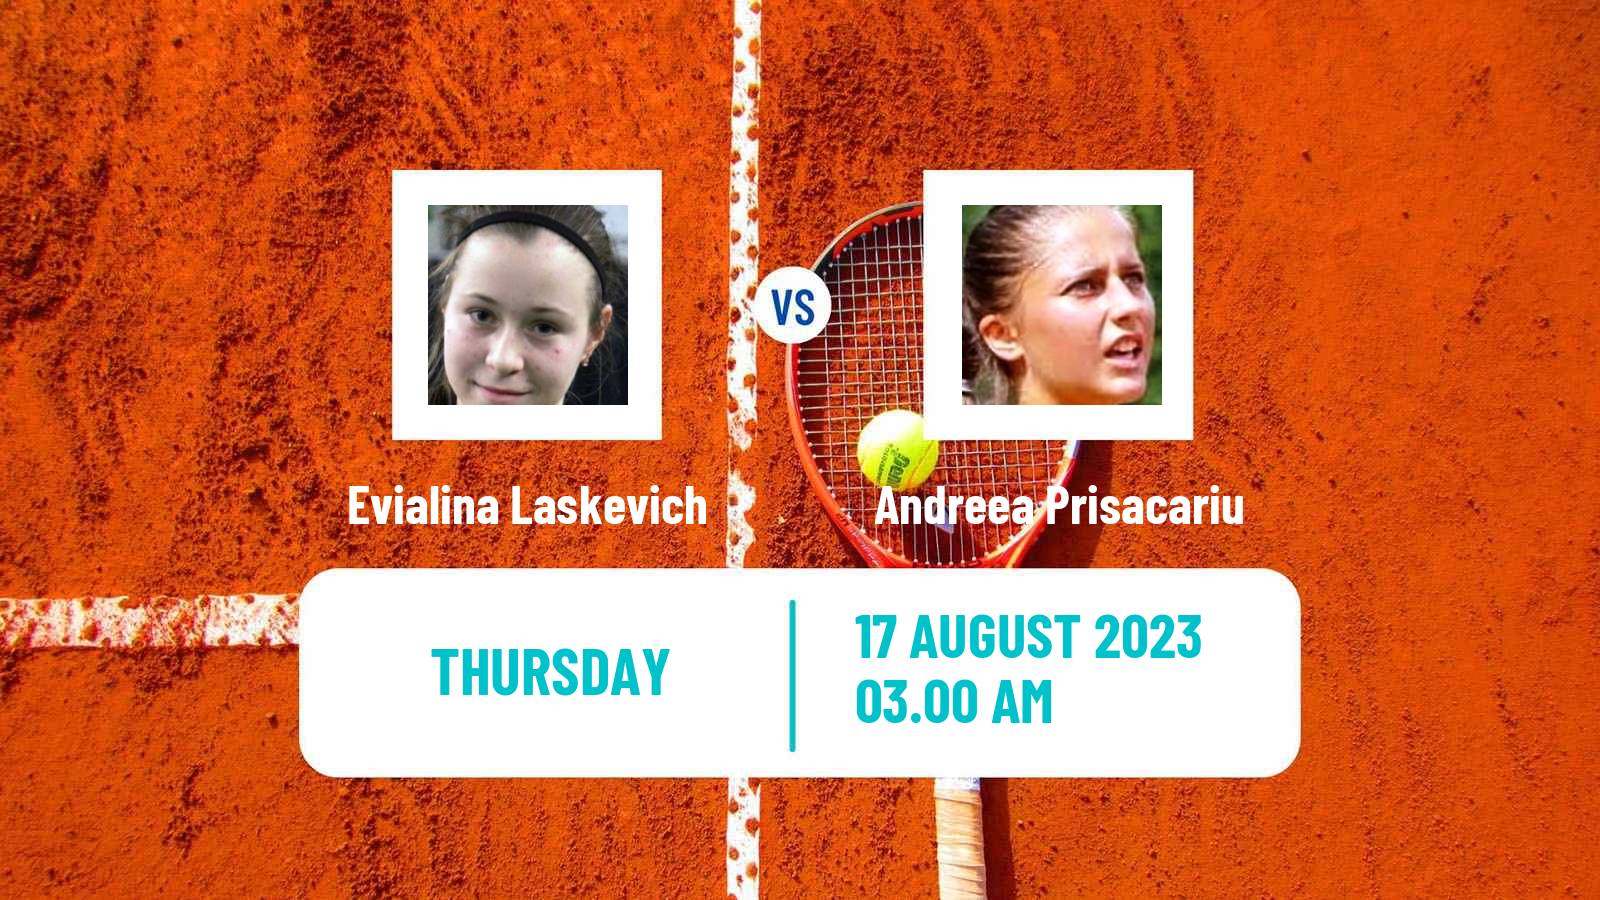 Tennis ITF W25 Bistrita Women Evialina Laskevich - Andreea Prisacariu